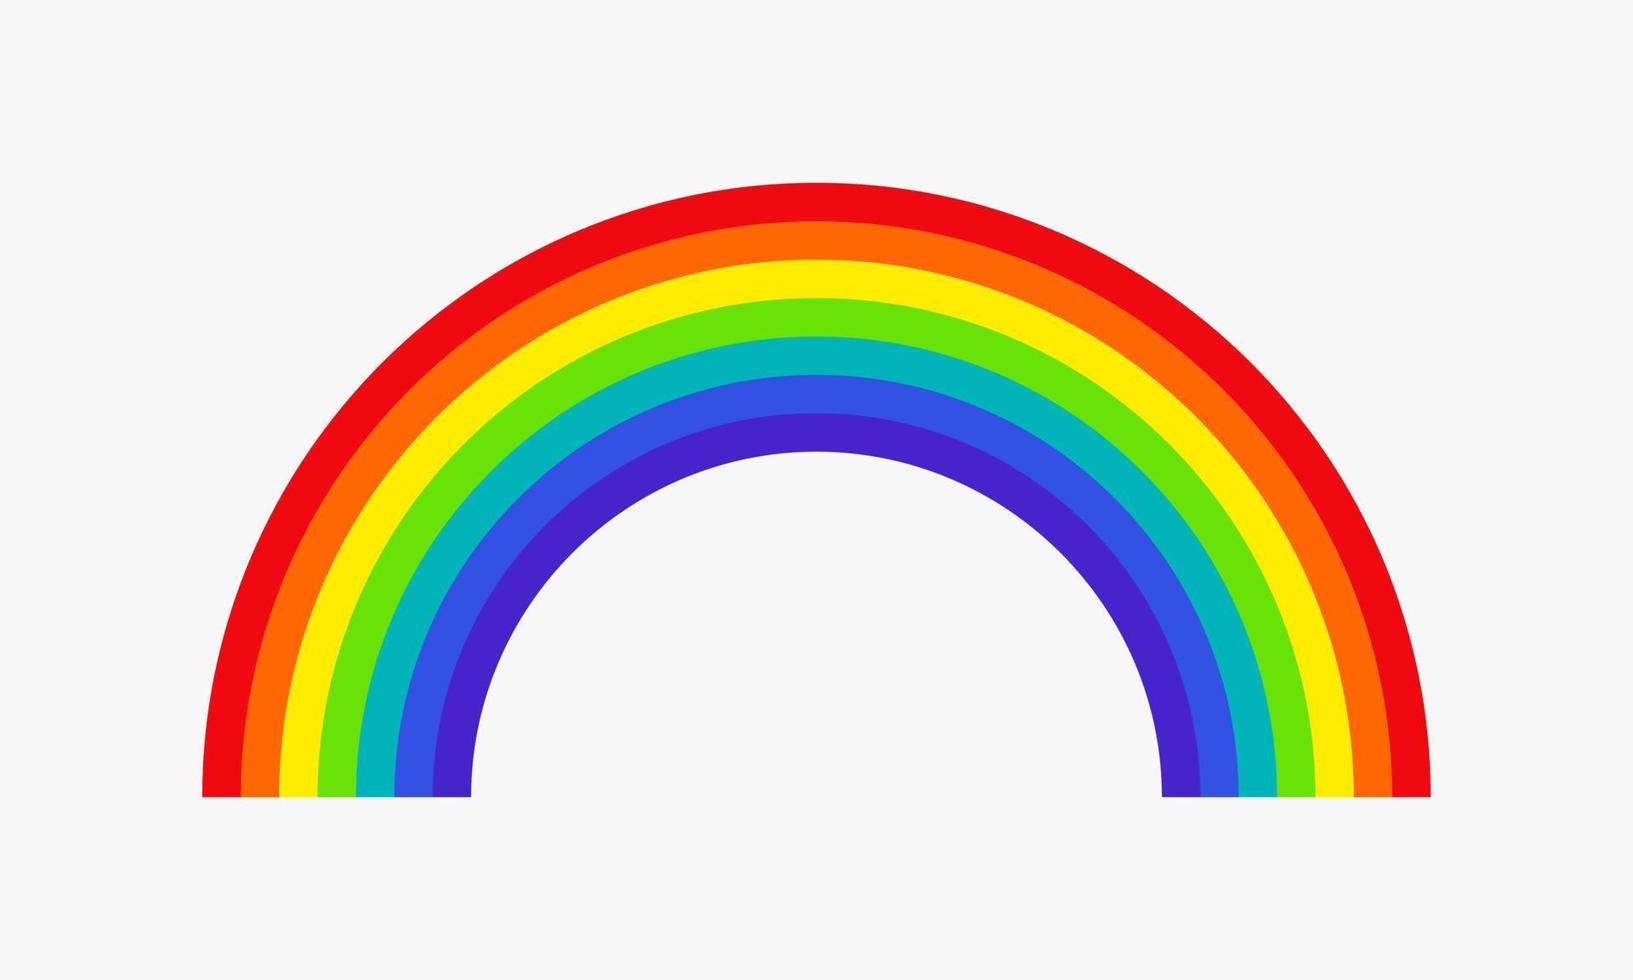 rainbow curved graphic design vector illustration.